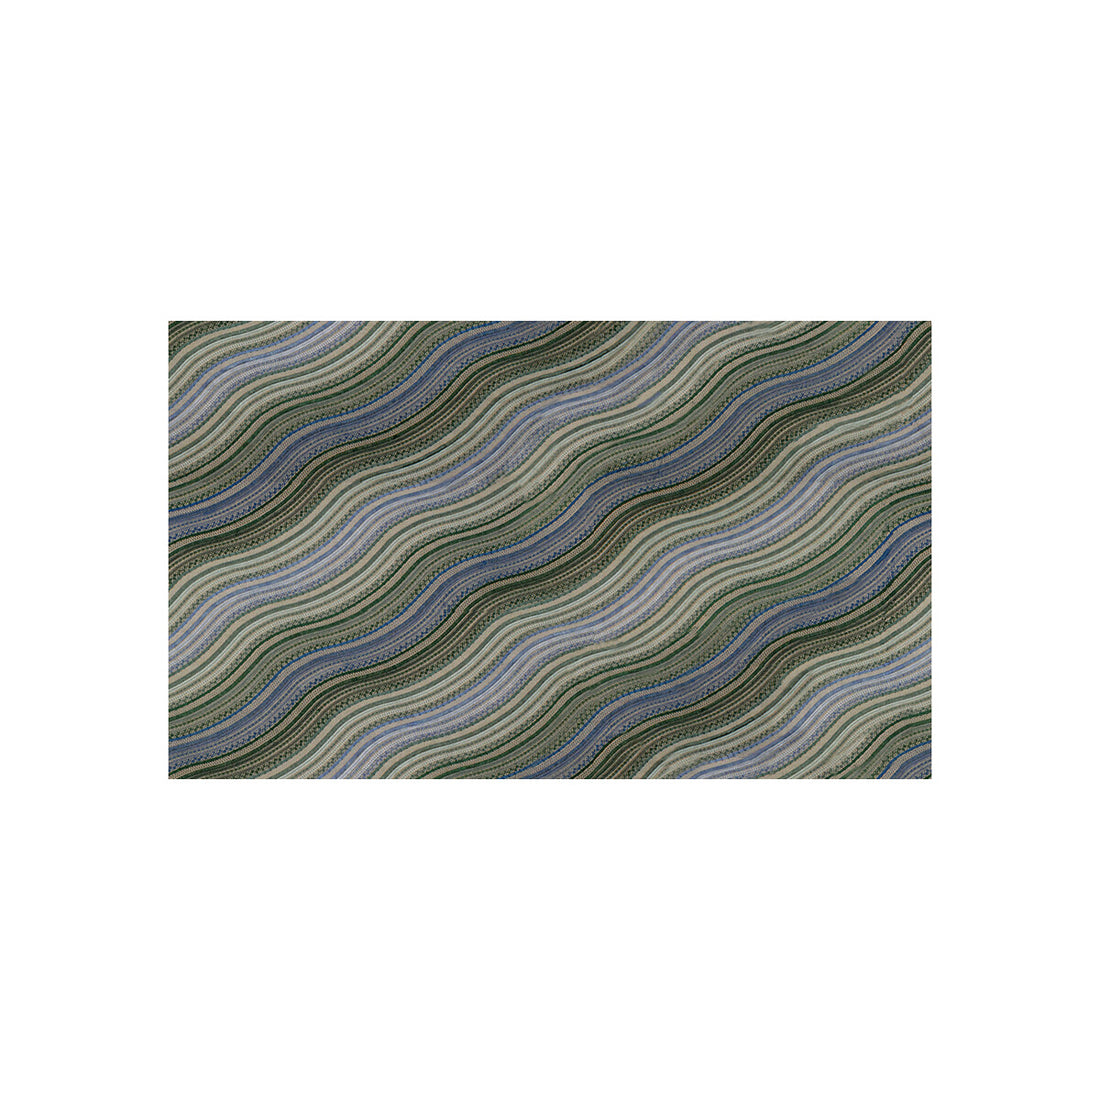 Water Stripe Emb fabric in juniper/lake color - pattern GWF-3100.313.0 - by Lee Jofa Modern in the Kelly Wearstler II collection